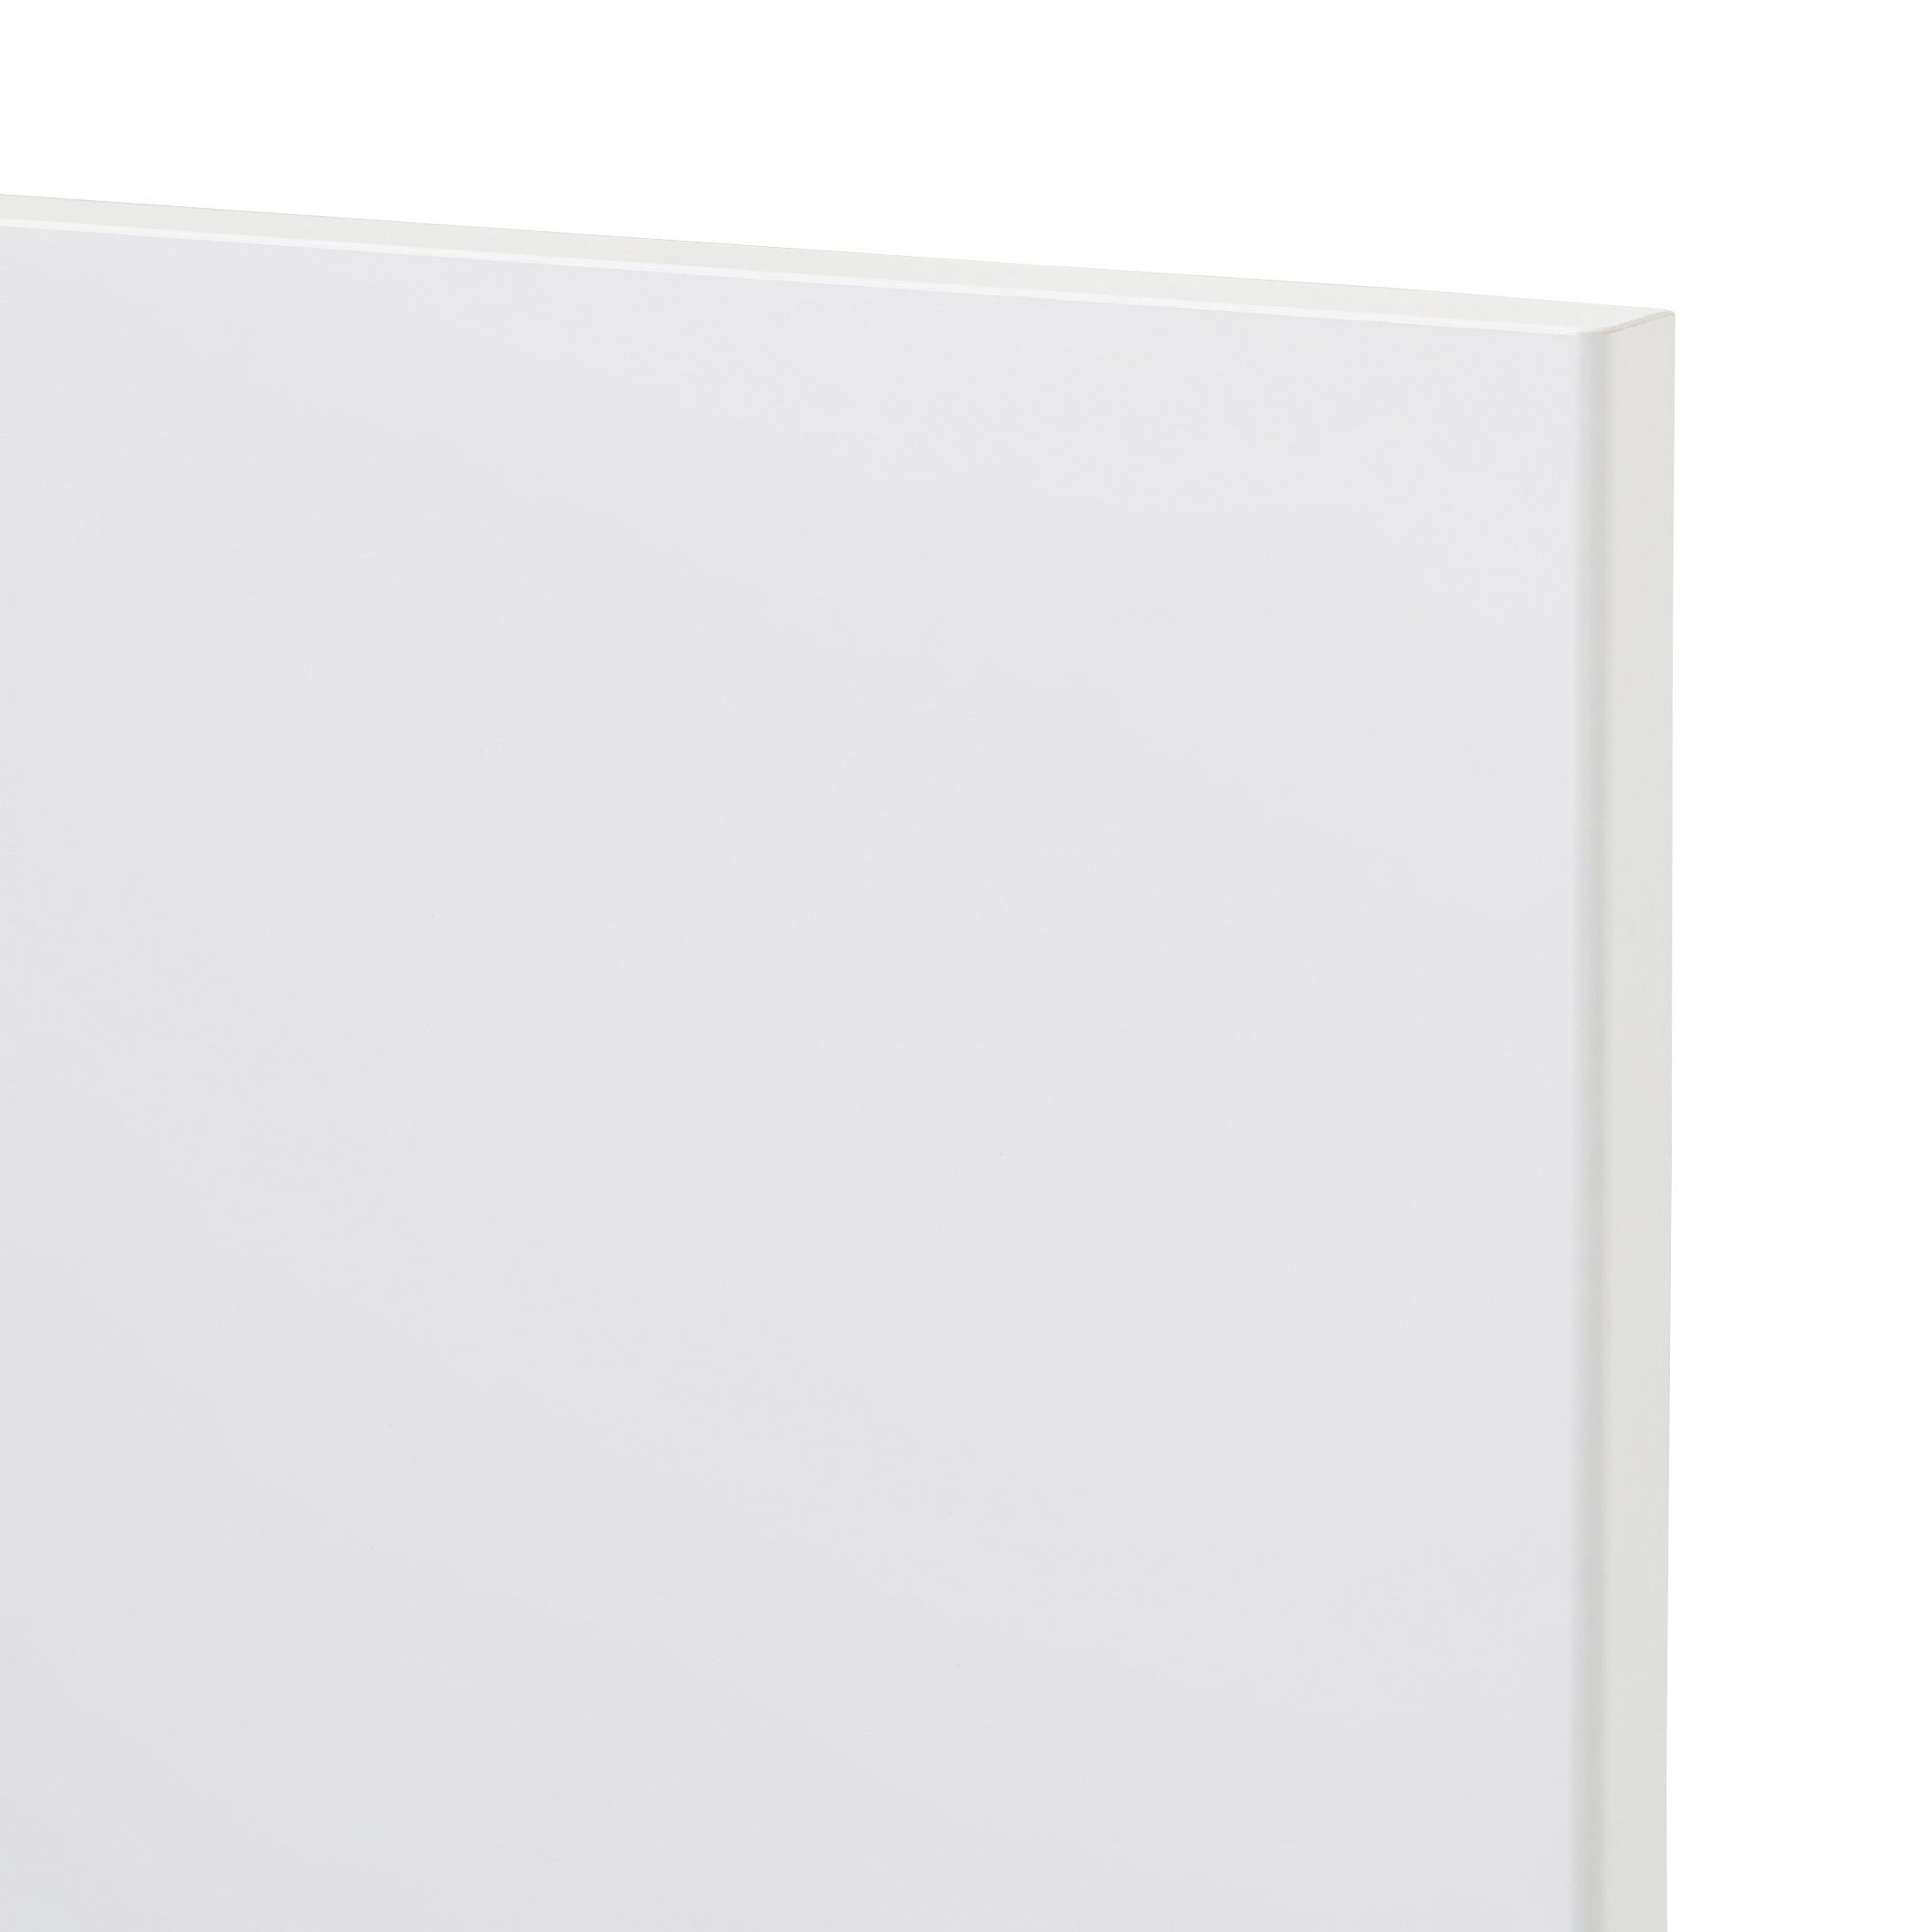 GoodHome Garcinia Gloss white integrated handle Bi-fold Cabinet door (W)600mm (H)356mm (T)19mm